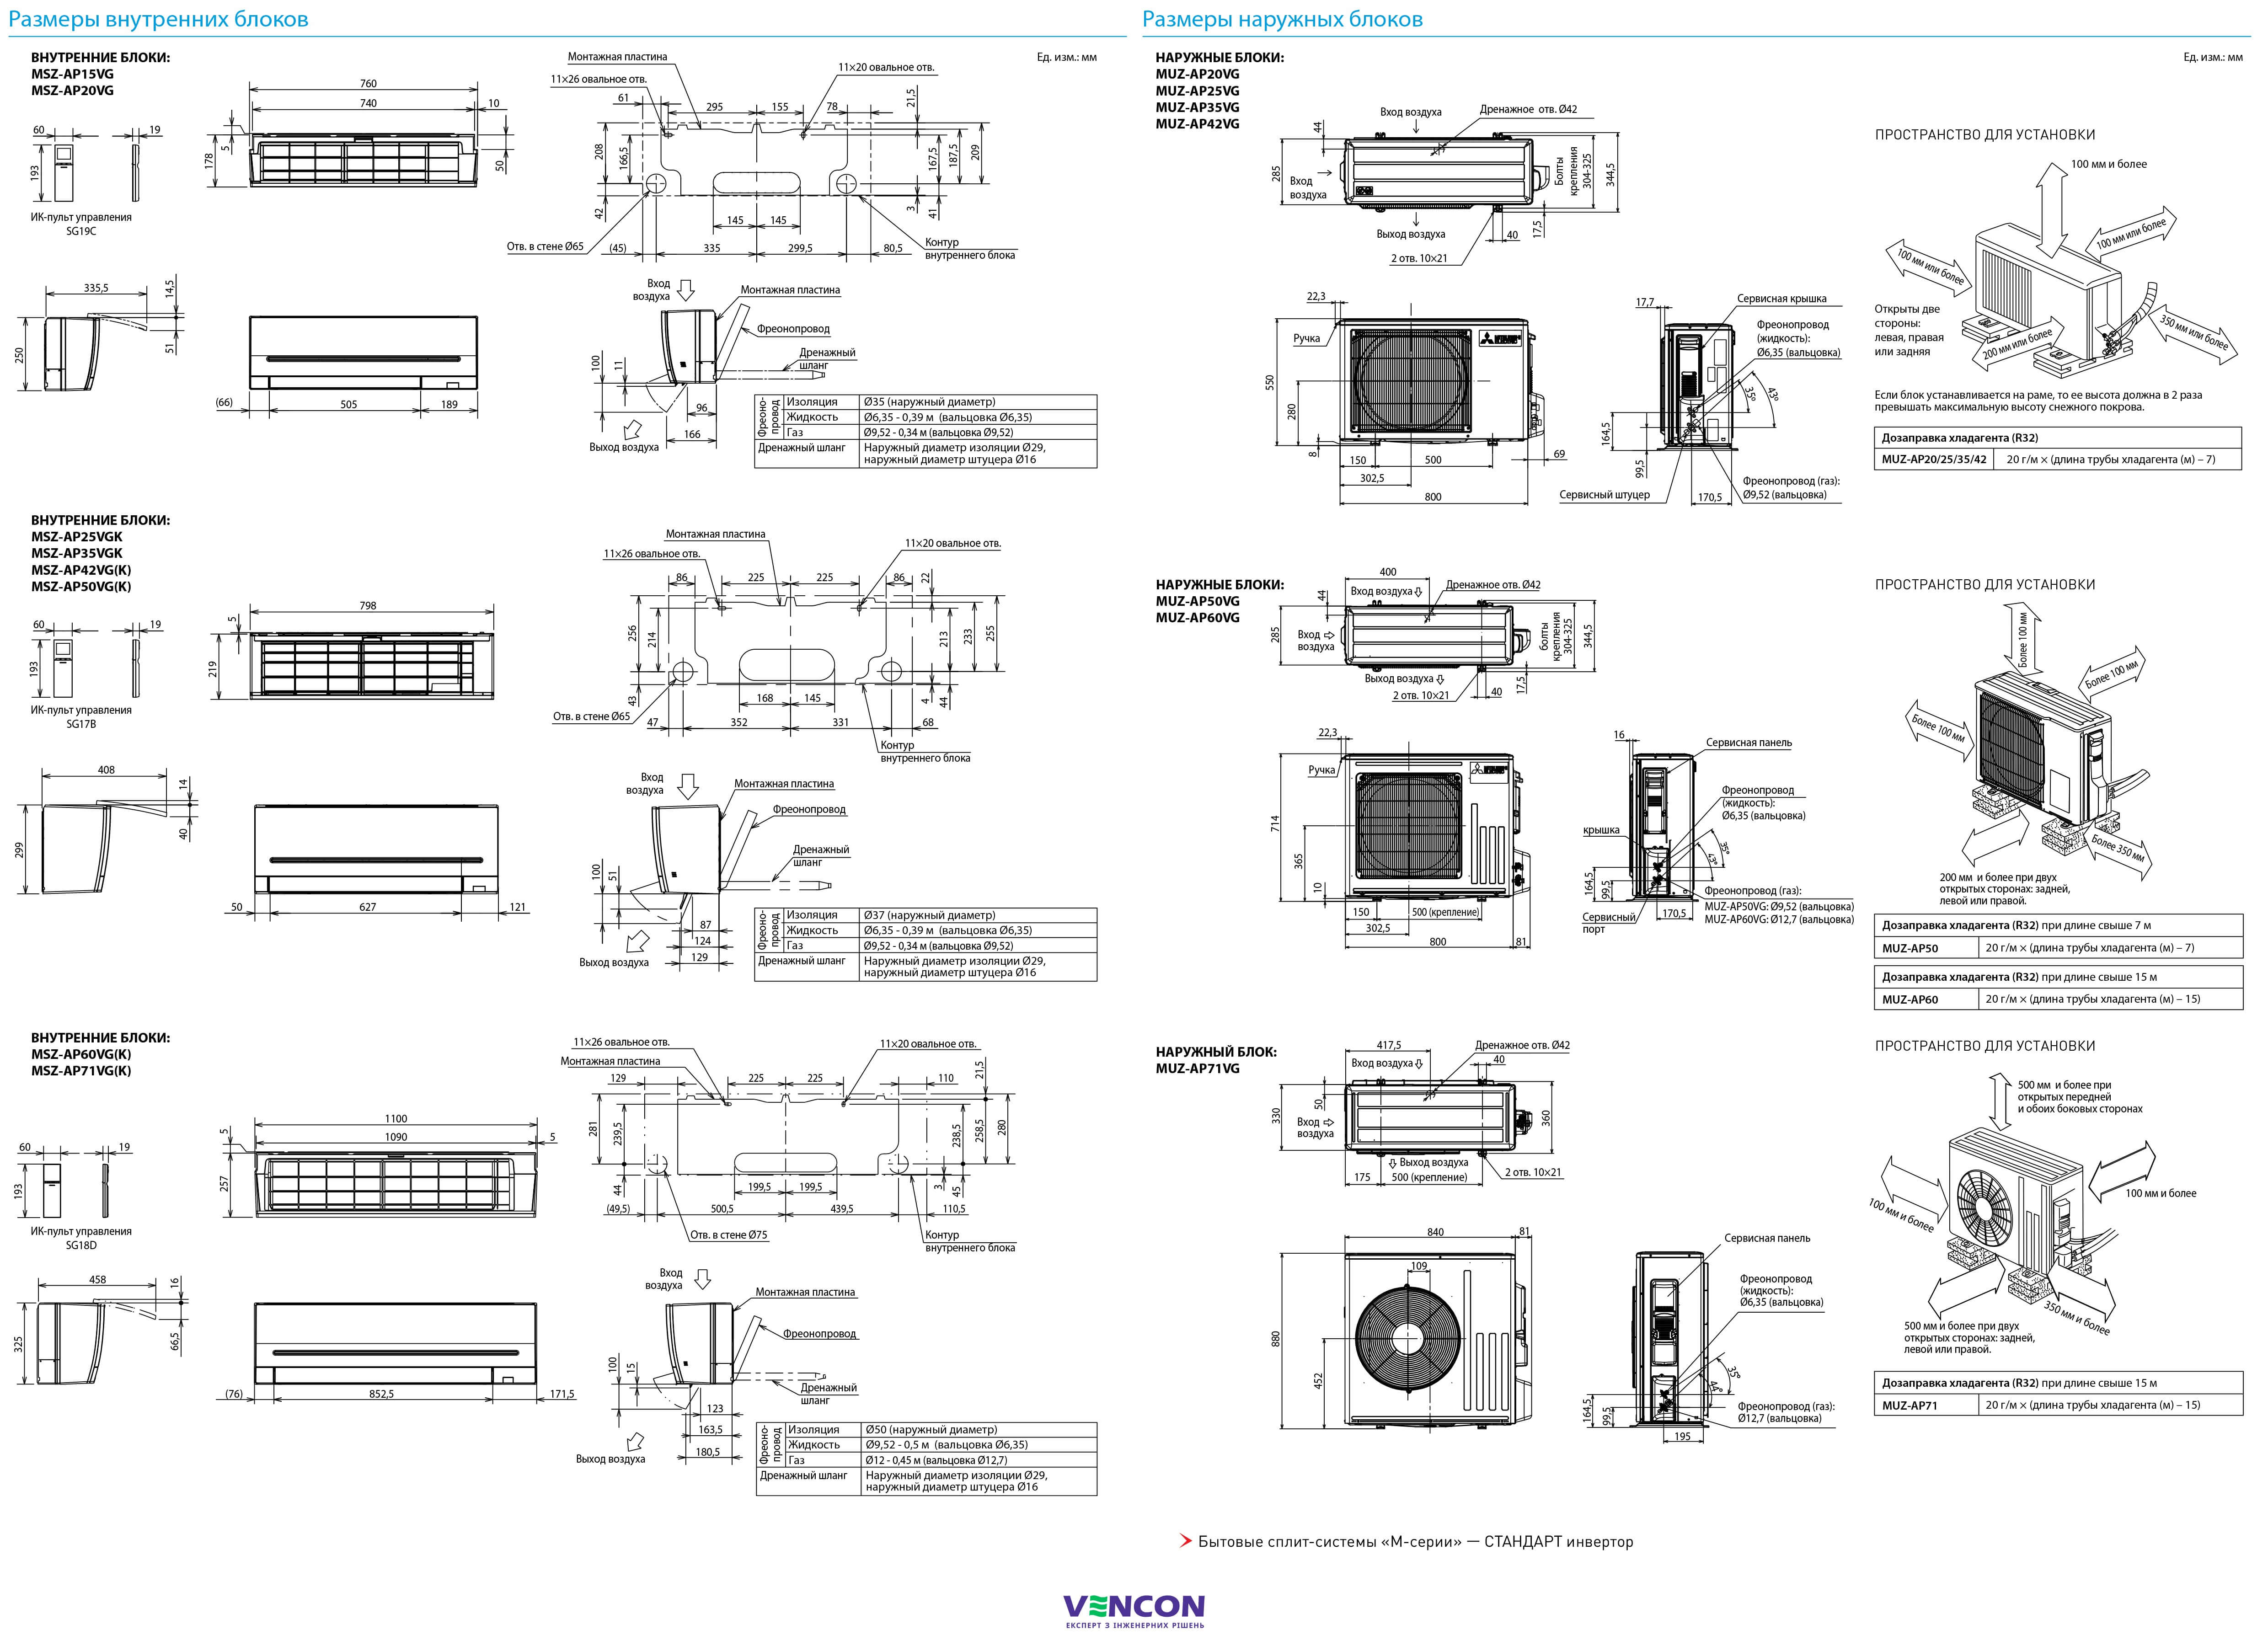 Mitsubishi Electric Standard Inverter MSZ-AP50VG/MUZ-AP50VG Габаритные размеры